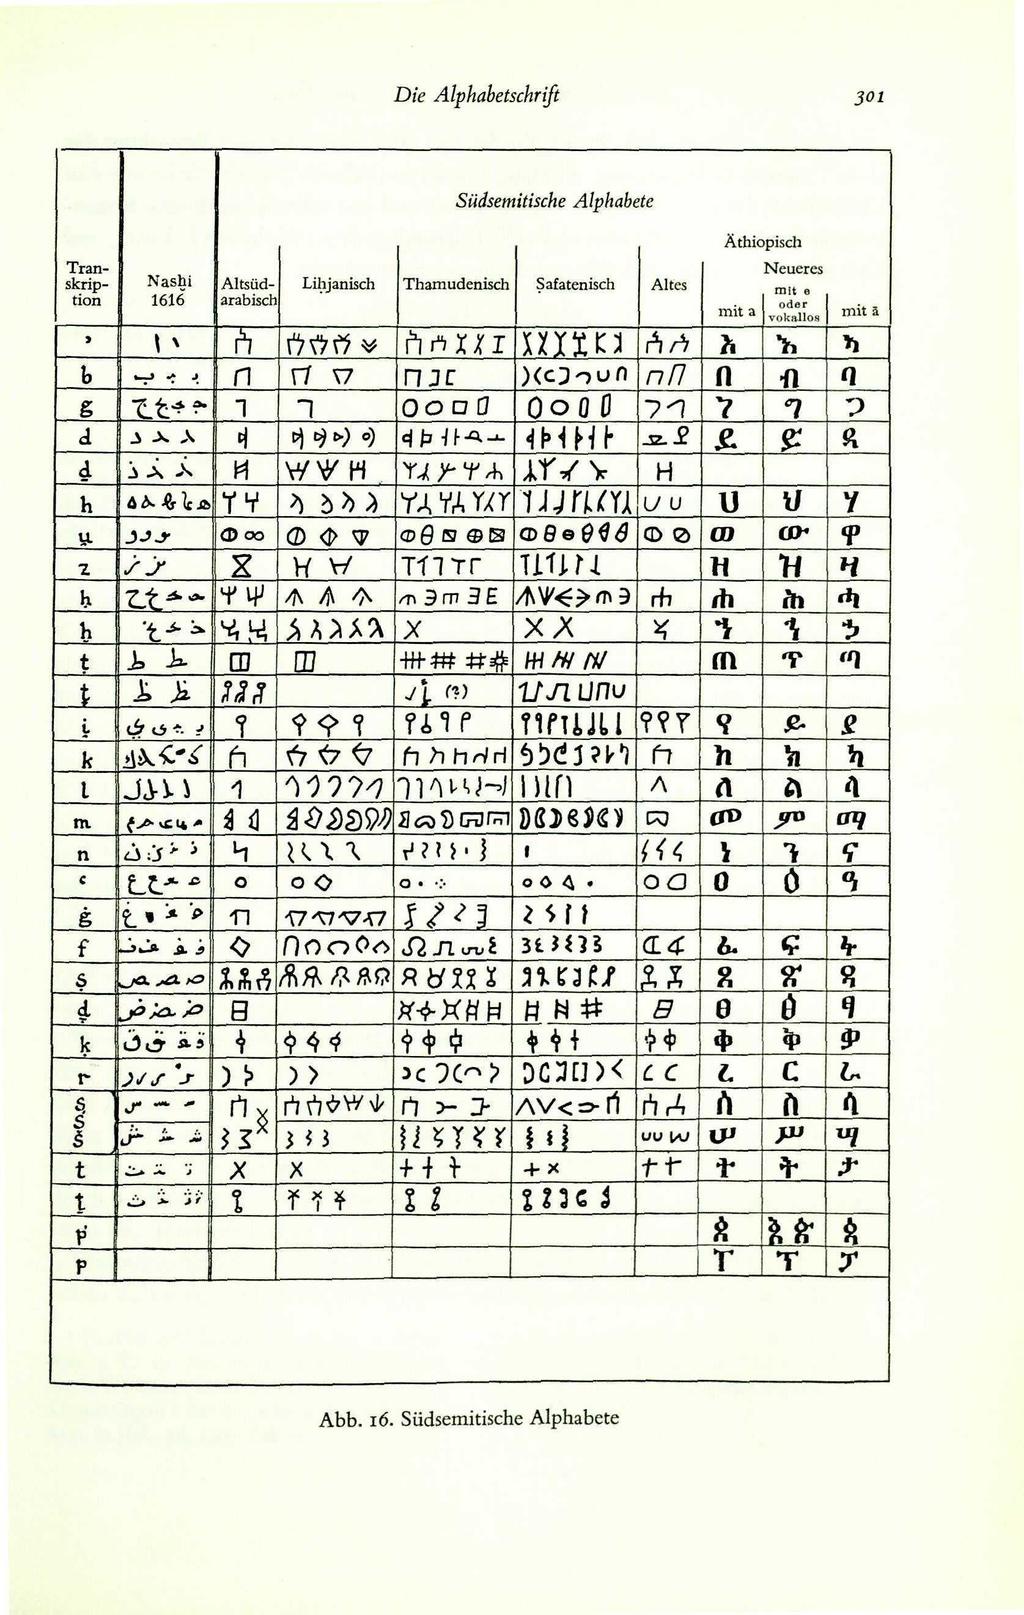 Die Alphabetschrifi 301 Südsen Alphabt Nashi 1616 Transkription Altsüdarabisch i \ * i.